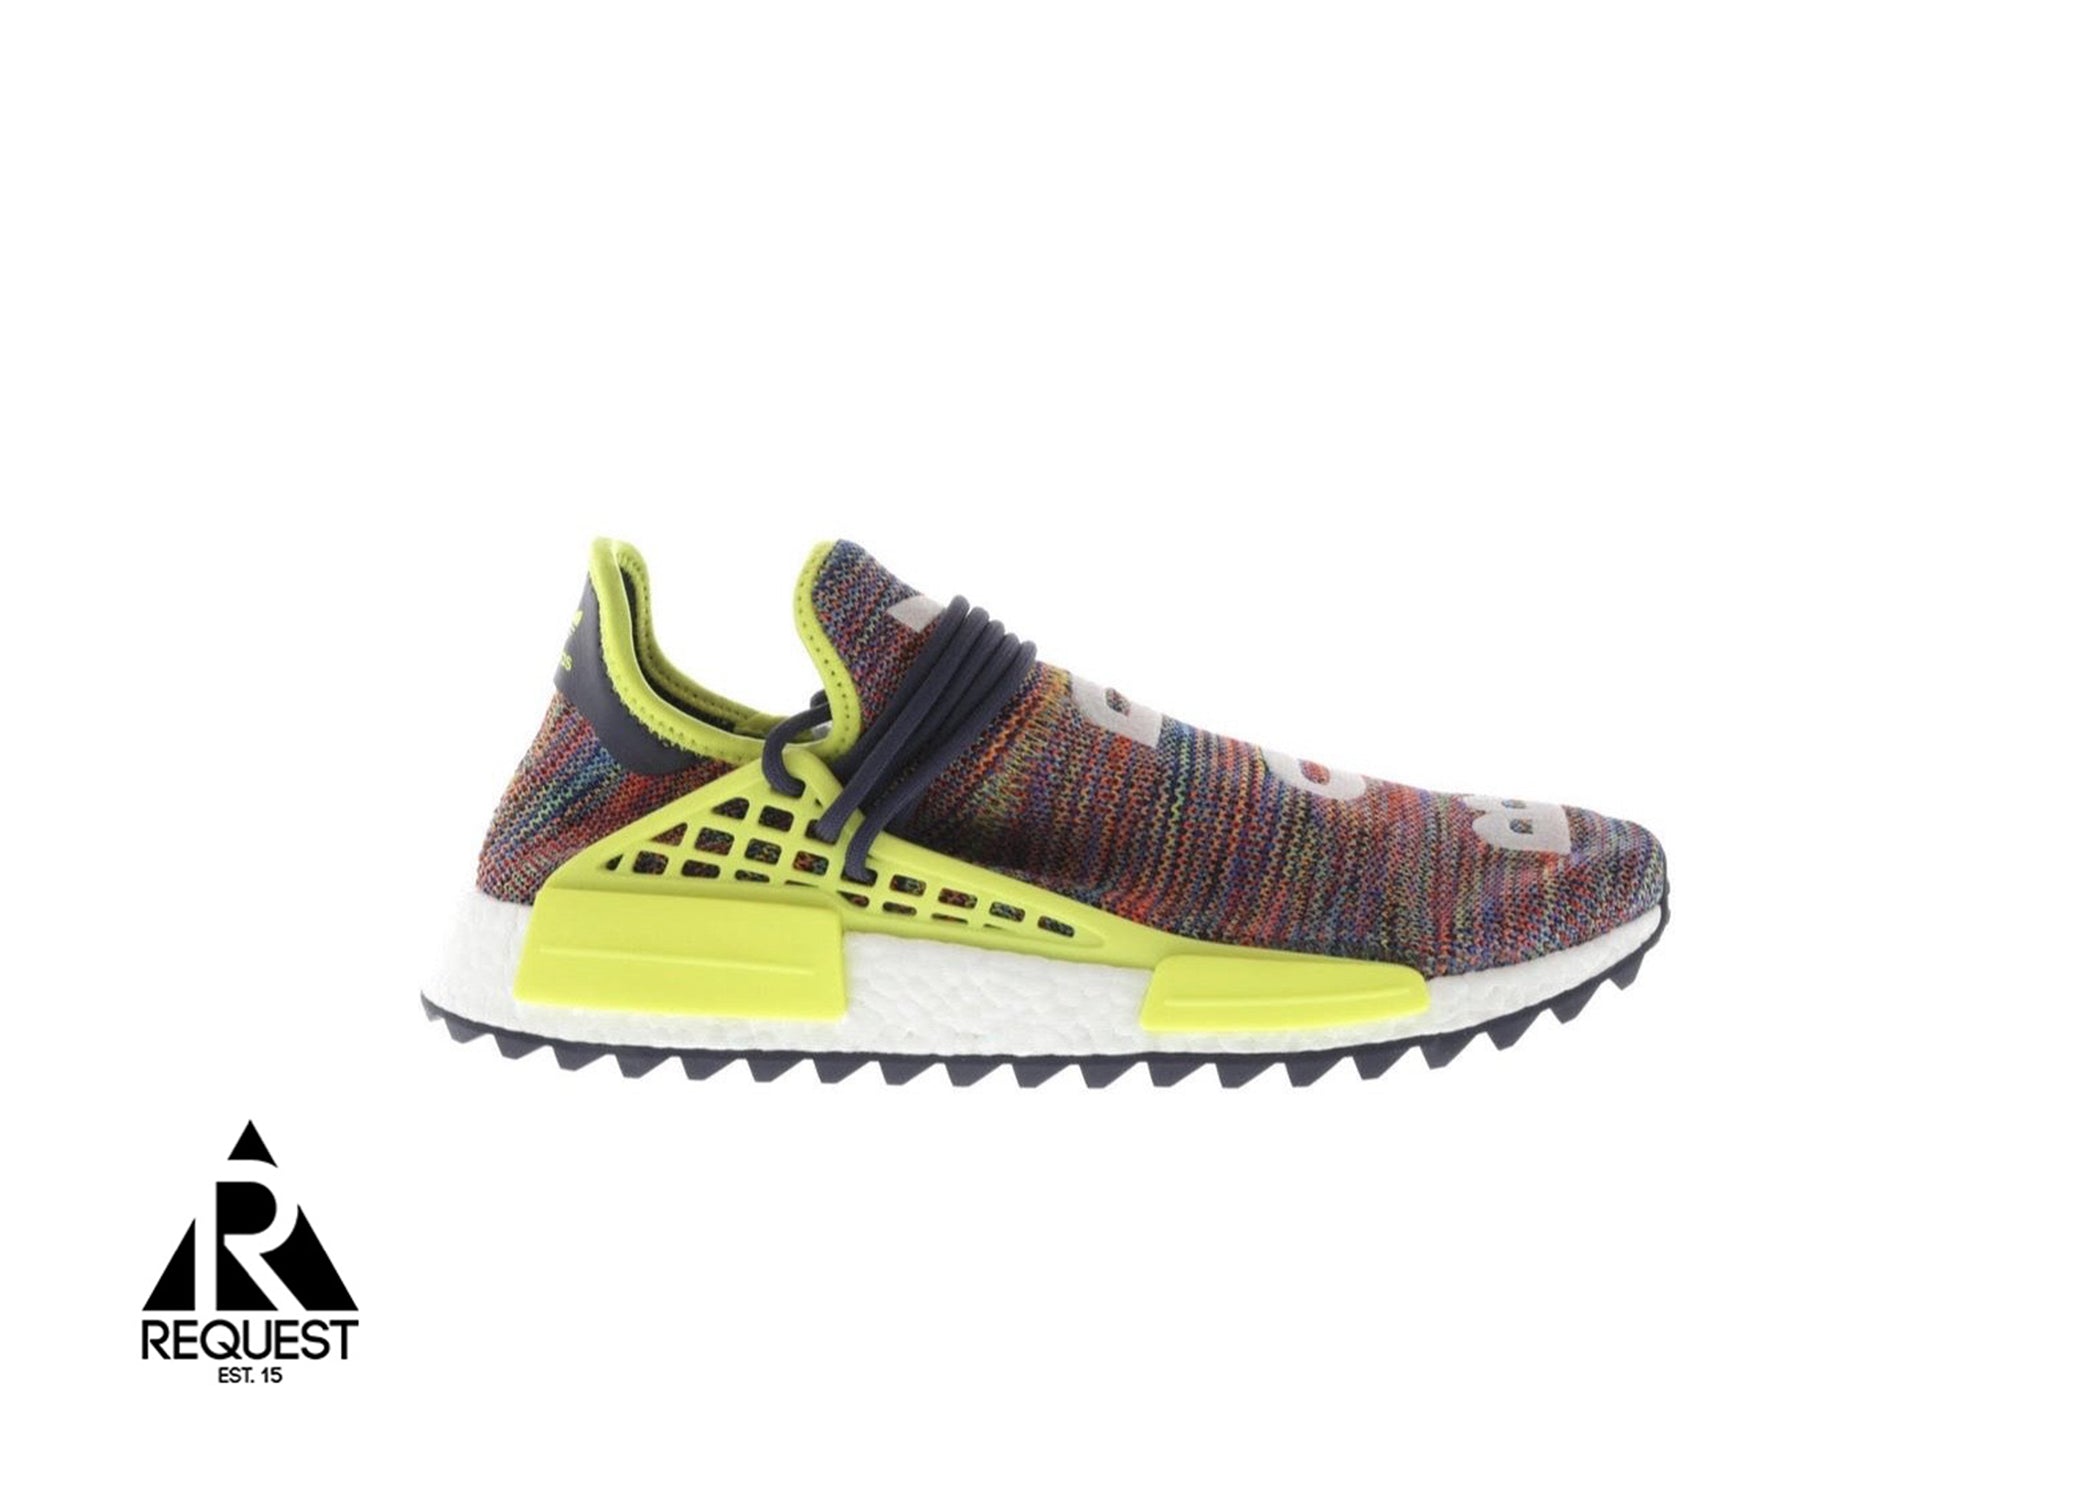 Adidas Human Race NMD “Multi Color”